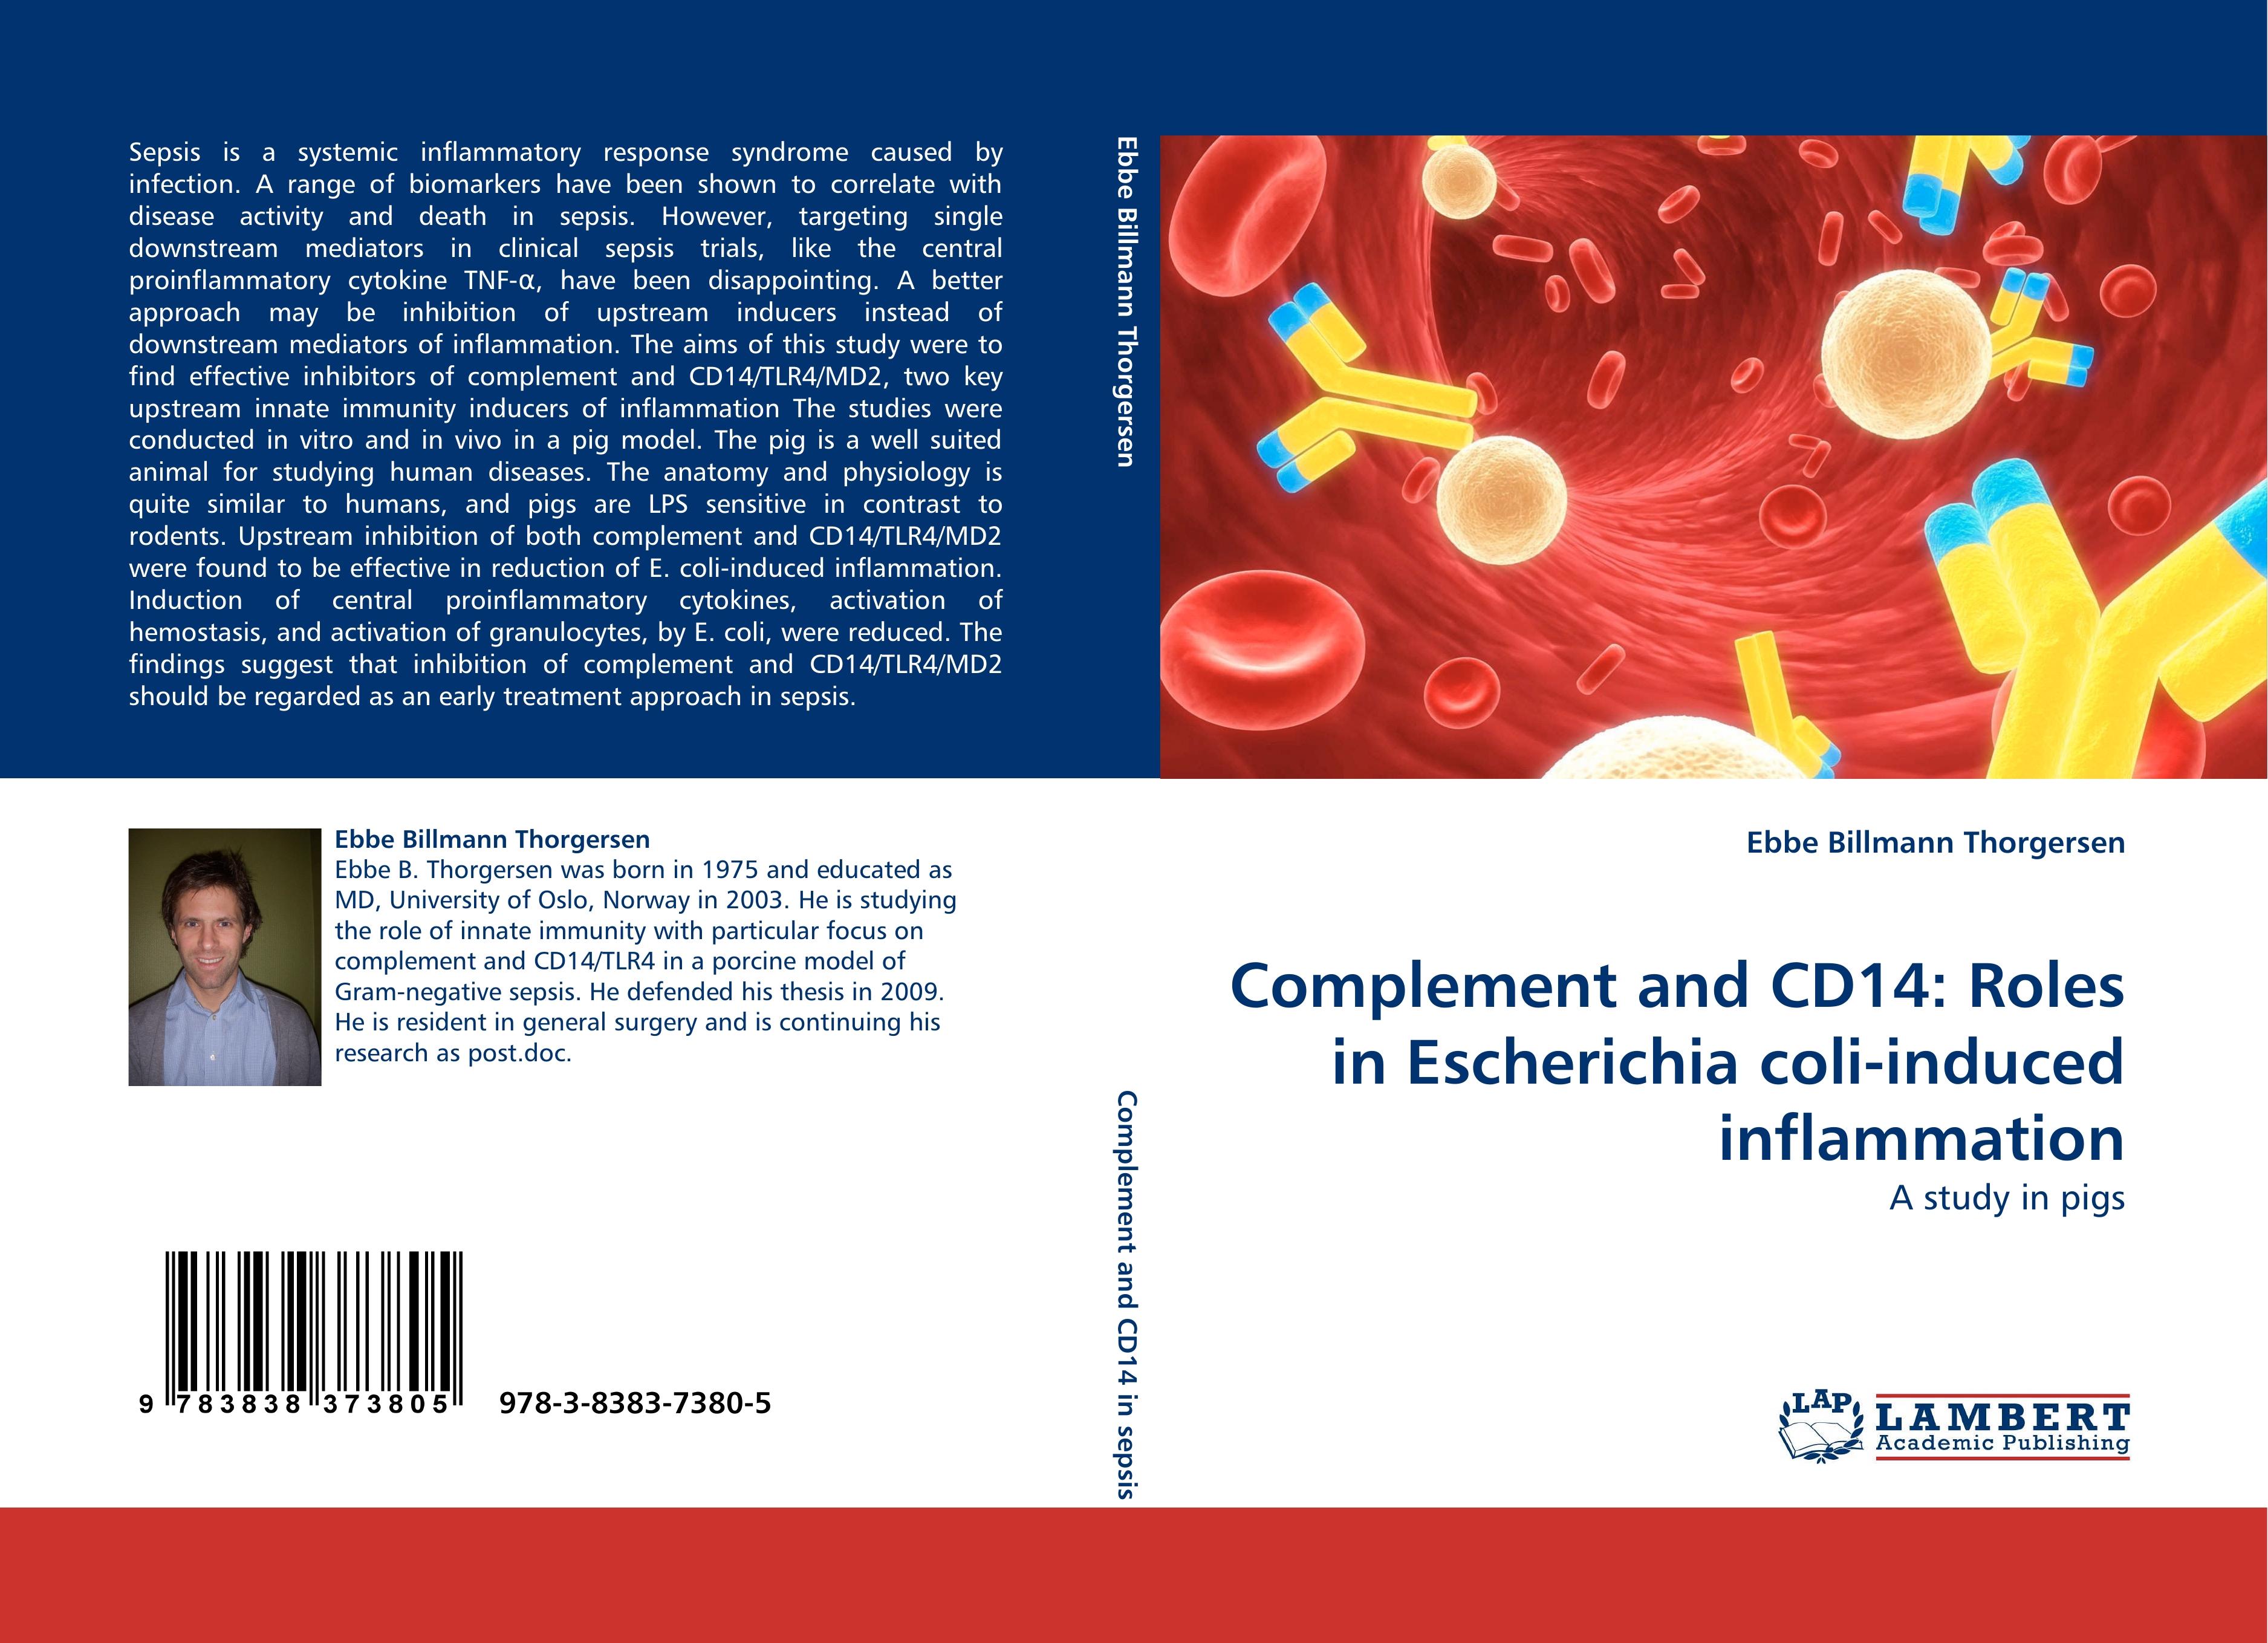 Complement and CD14: Roles in Escherichia coli-induced inflammation - Ebbe Billmann Thorgersen